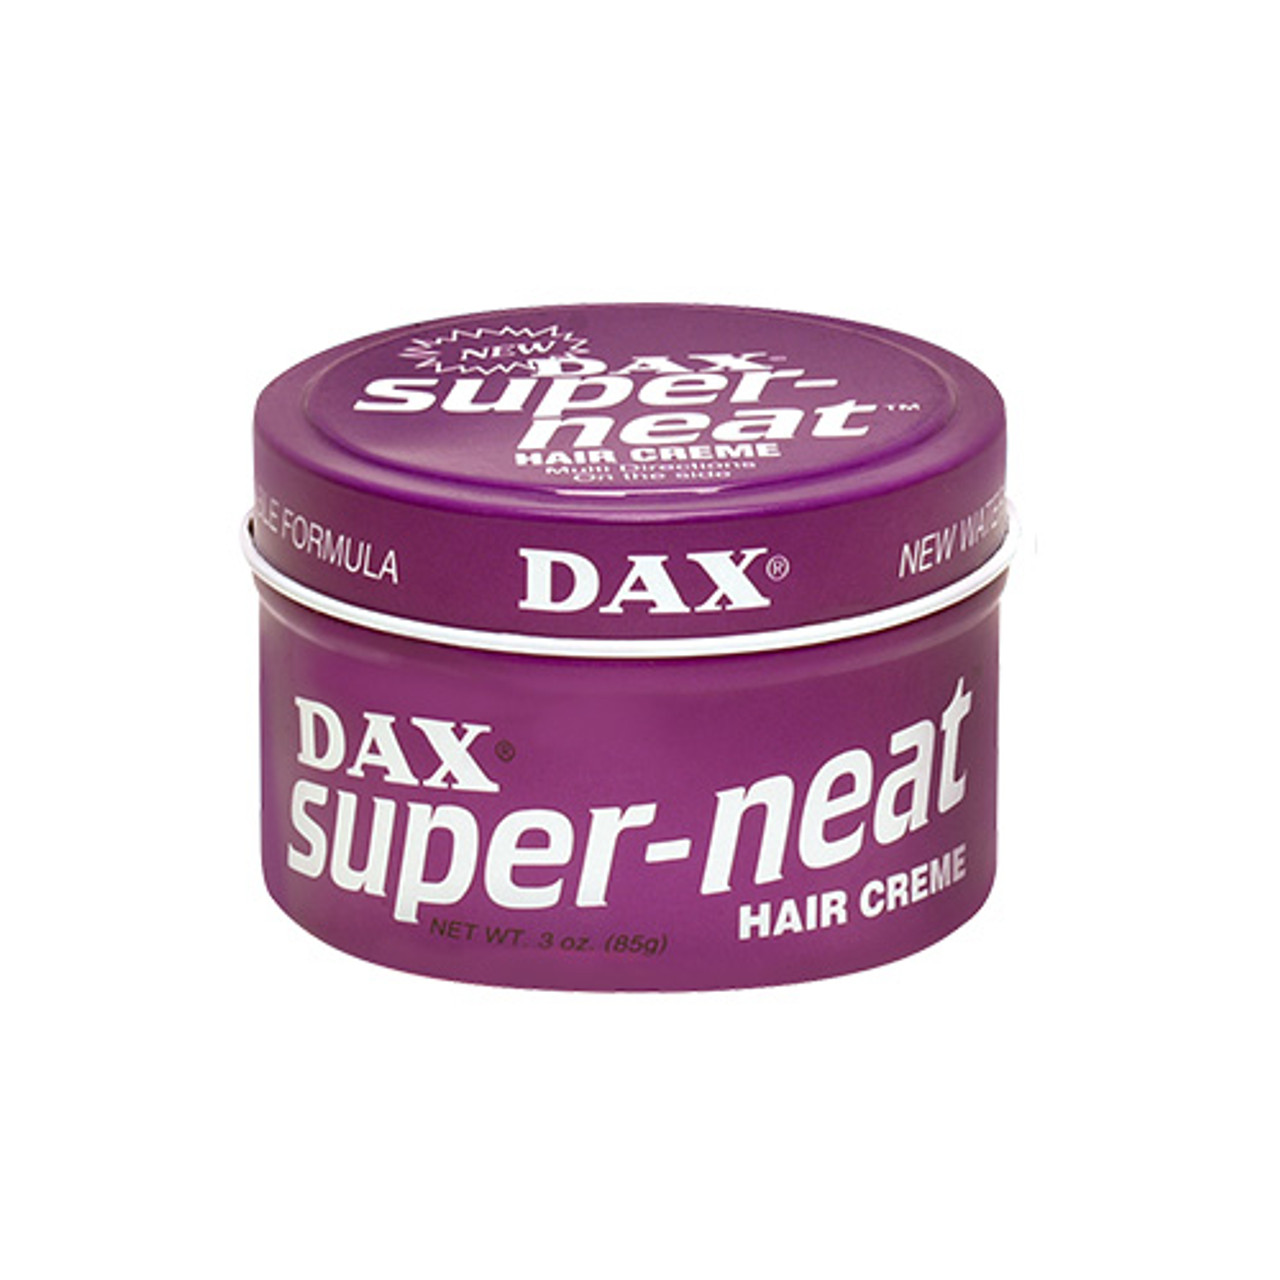 DAX Super Lanolin - DAX Hair Care